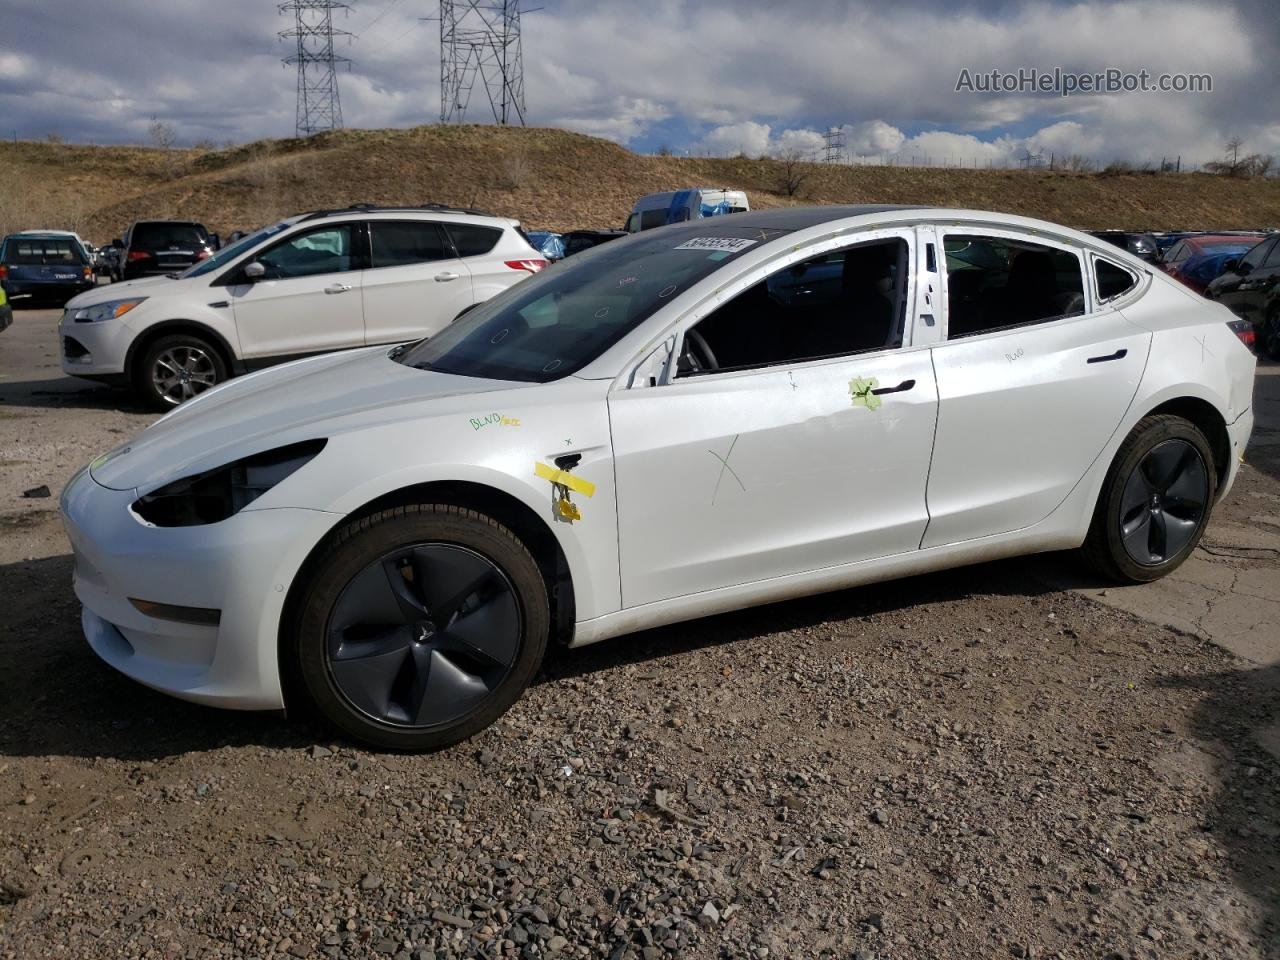 2020 Tesla Model 3  White vin: 5YJ3E1EA1LF598210